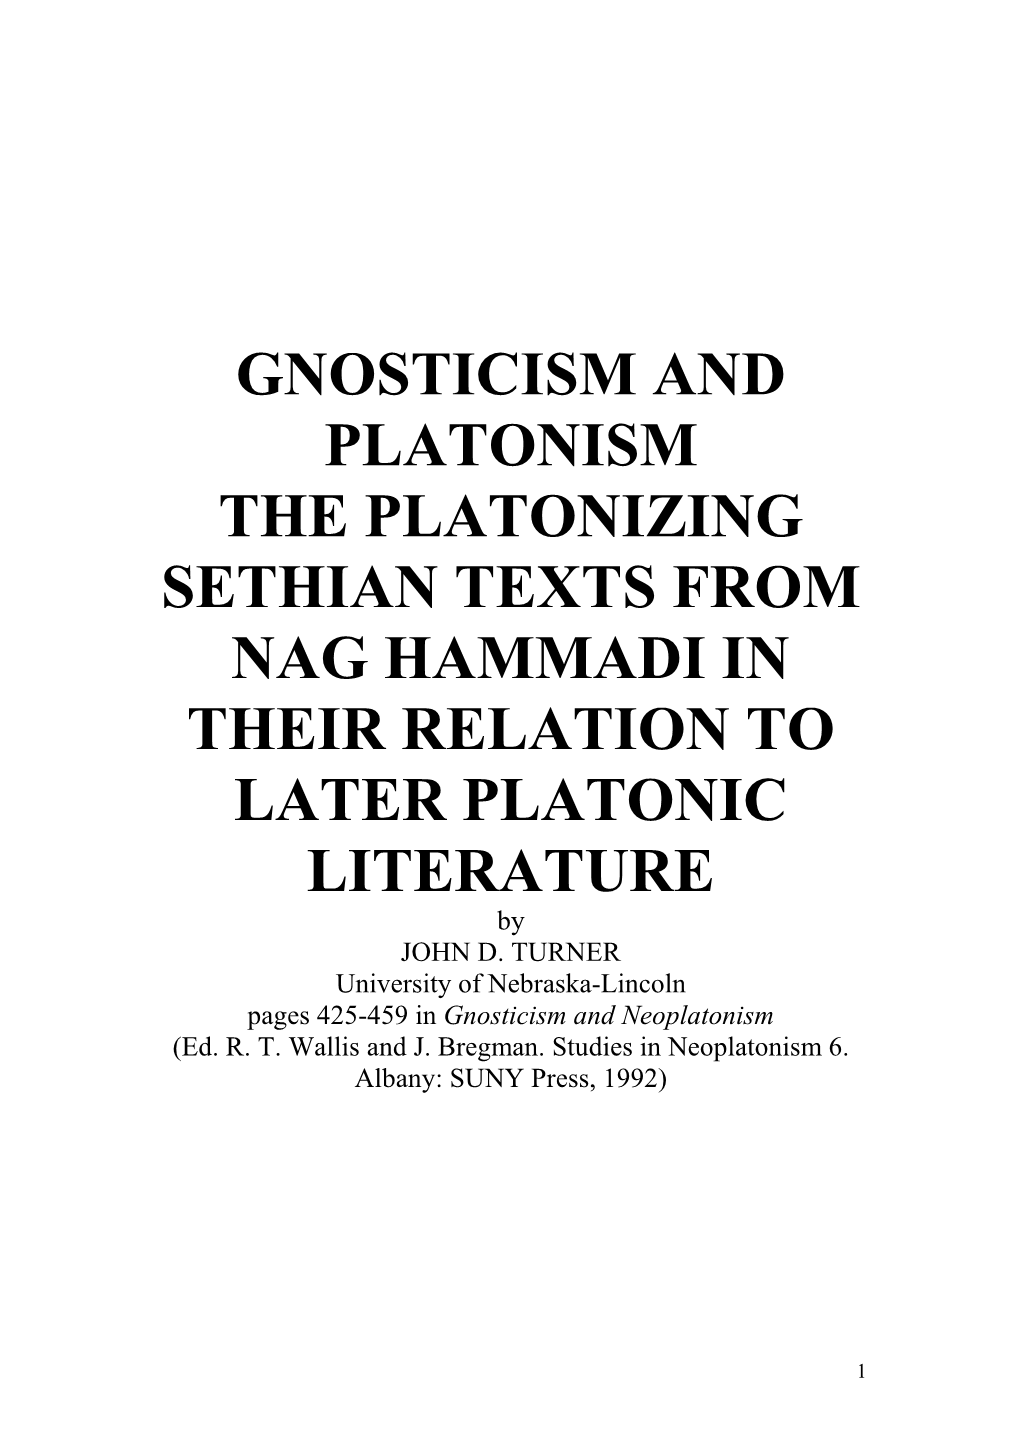 John D. Turner. Gnosticism and Platonism